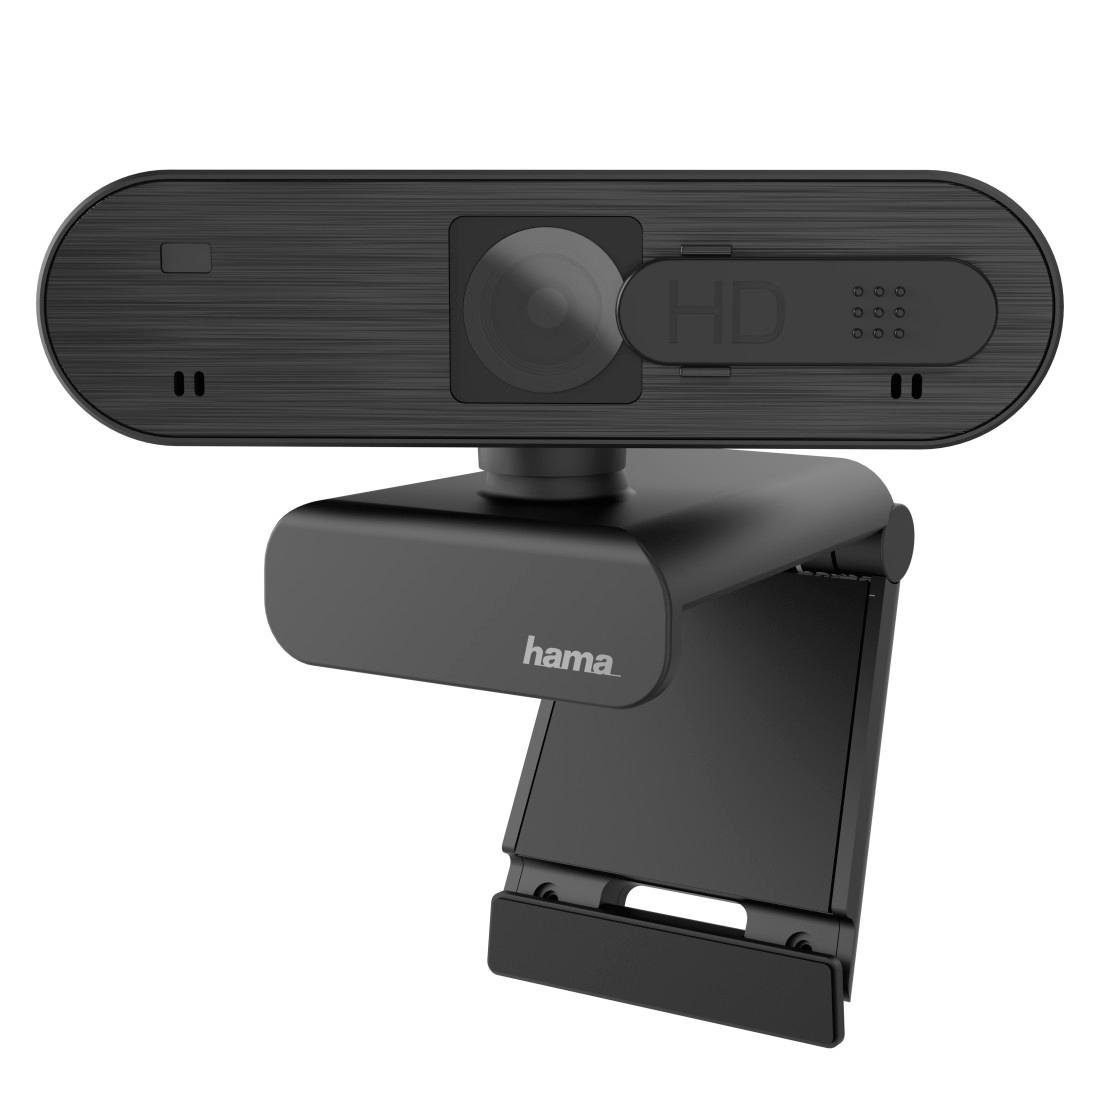 Hama PC-Webcam "C-600 Pro", 1080p Full-HD Webcam Webcam